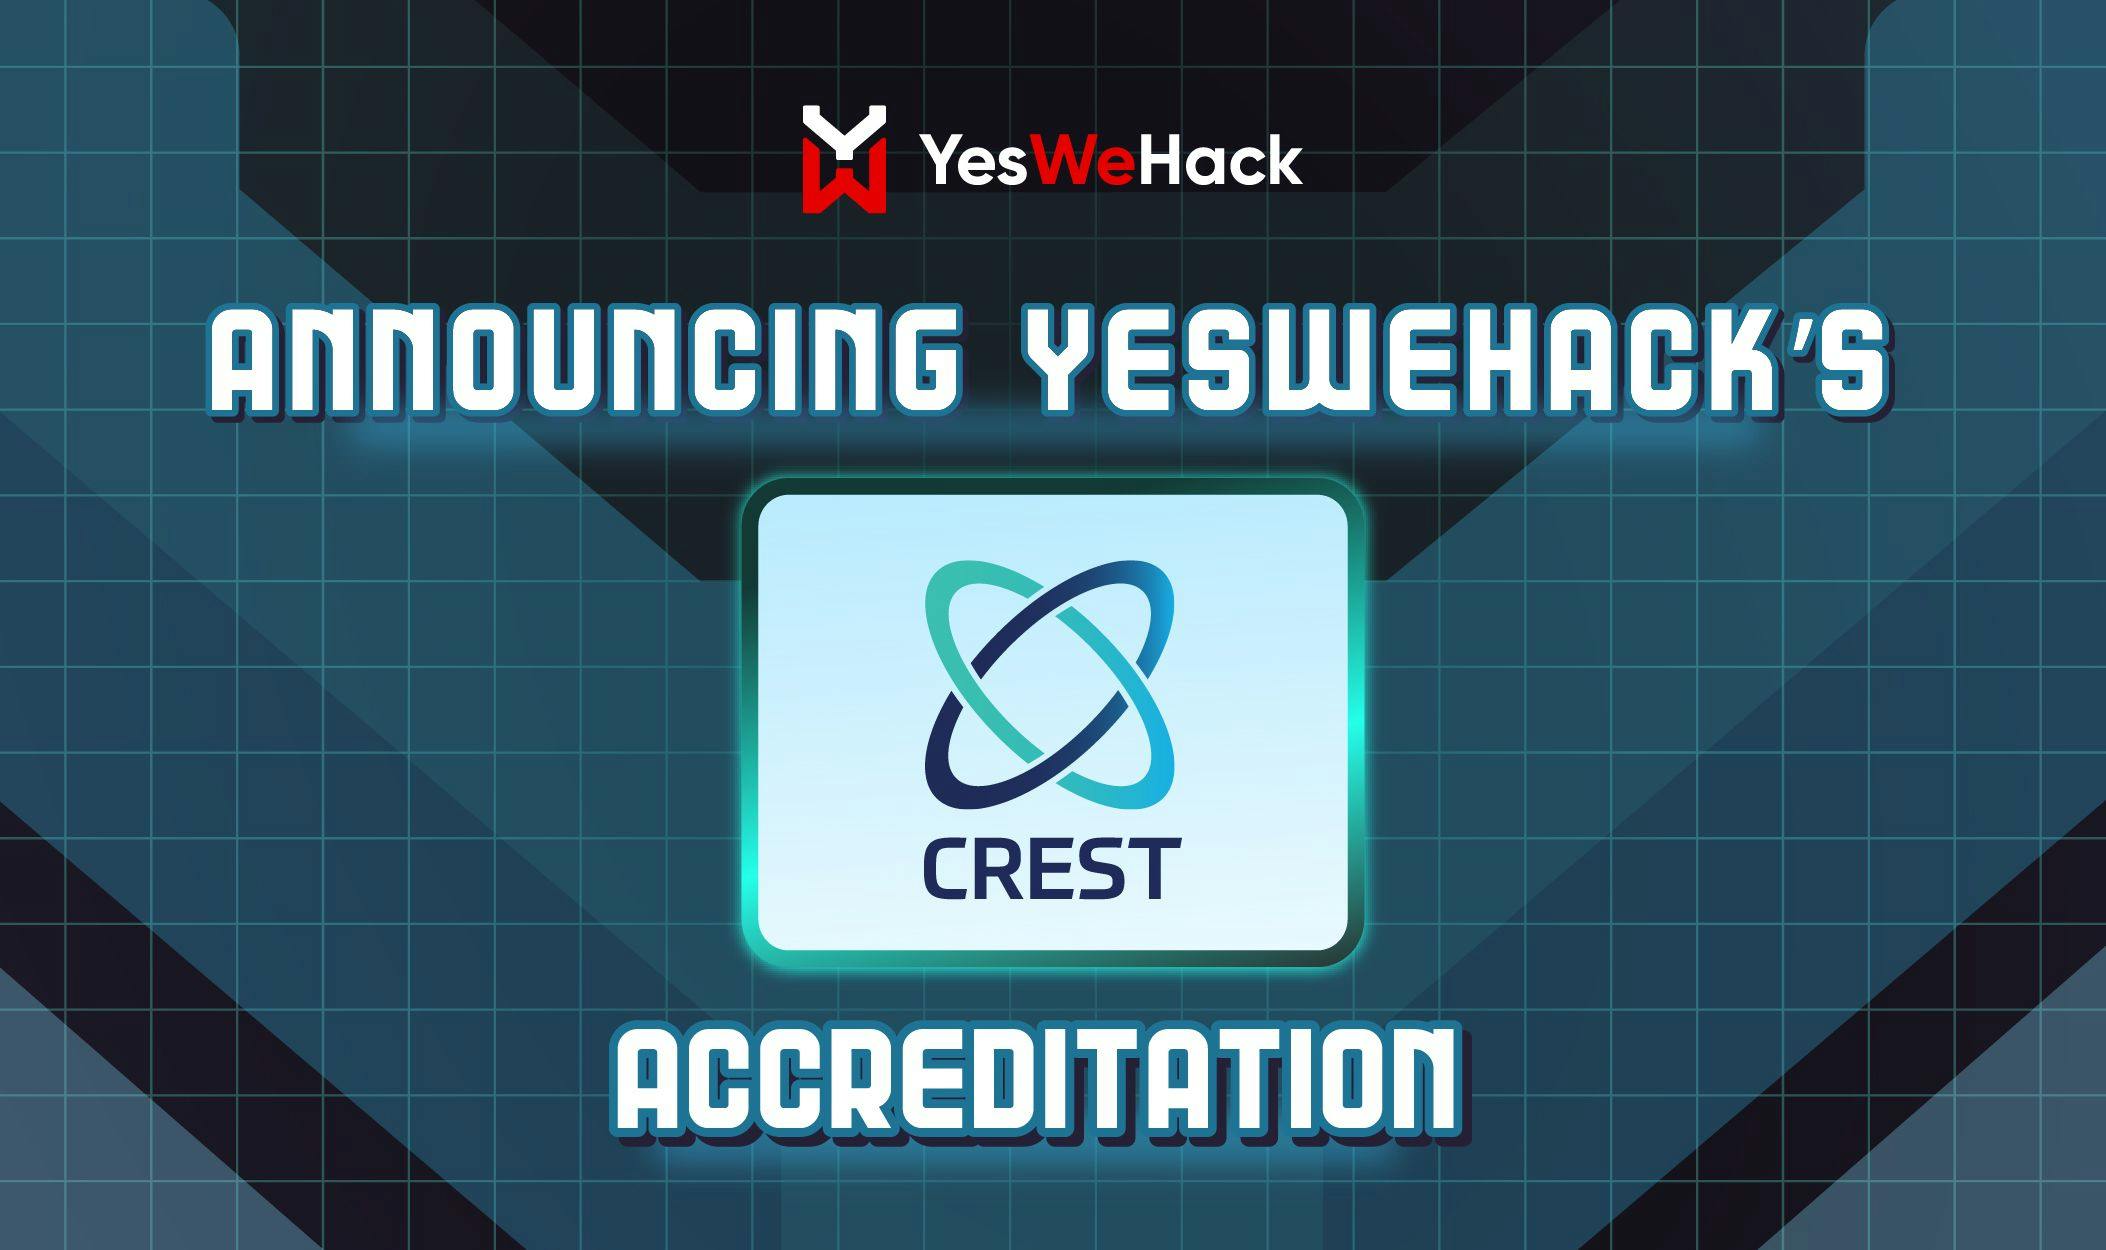 YesWeHack announces CREST accreditation